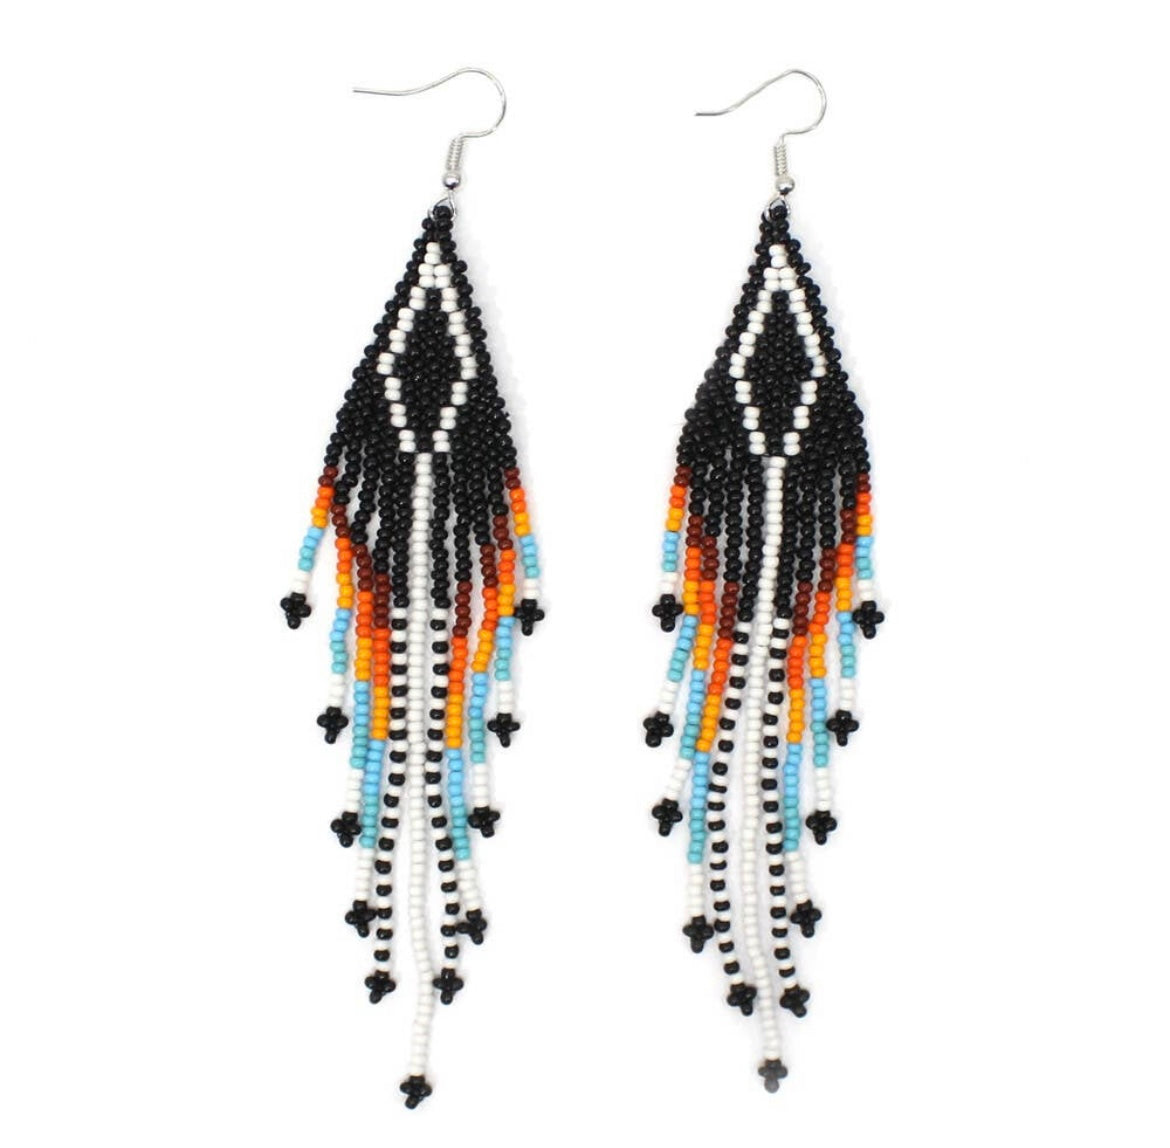 Handmade Beaded Earrings - Native Style